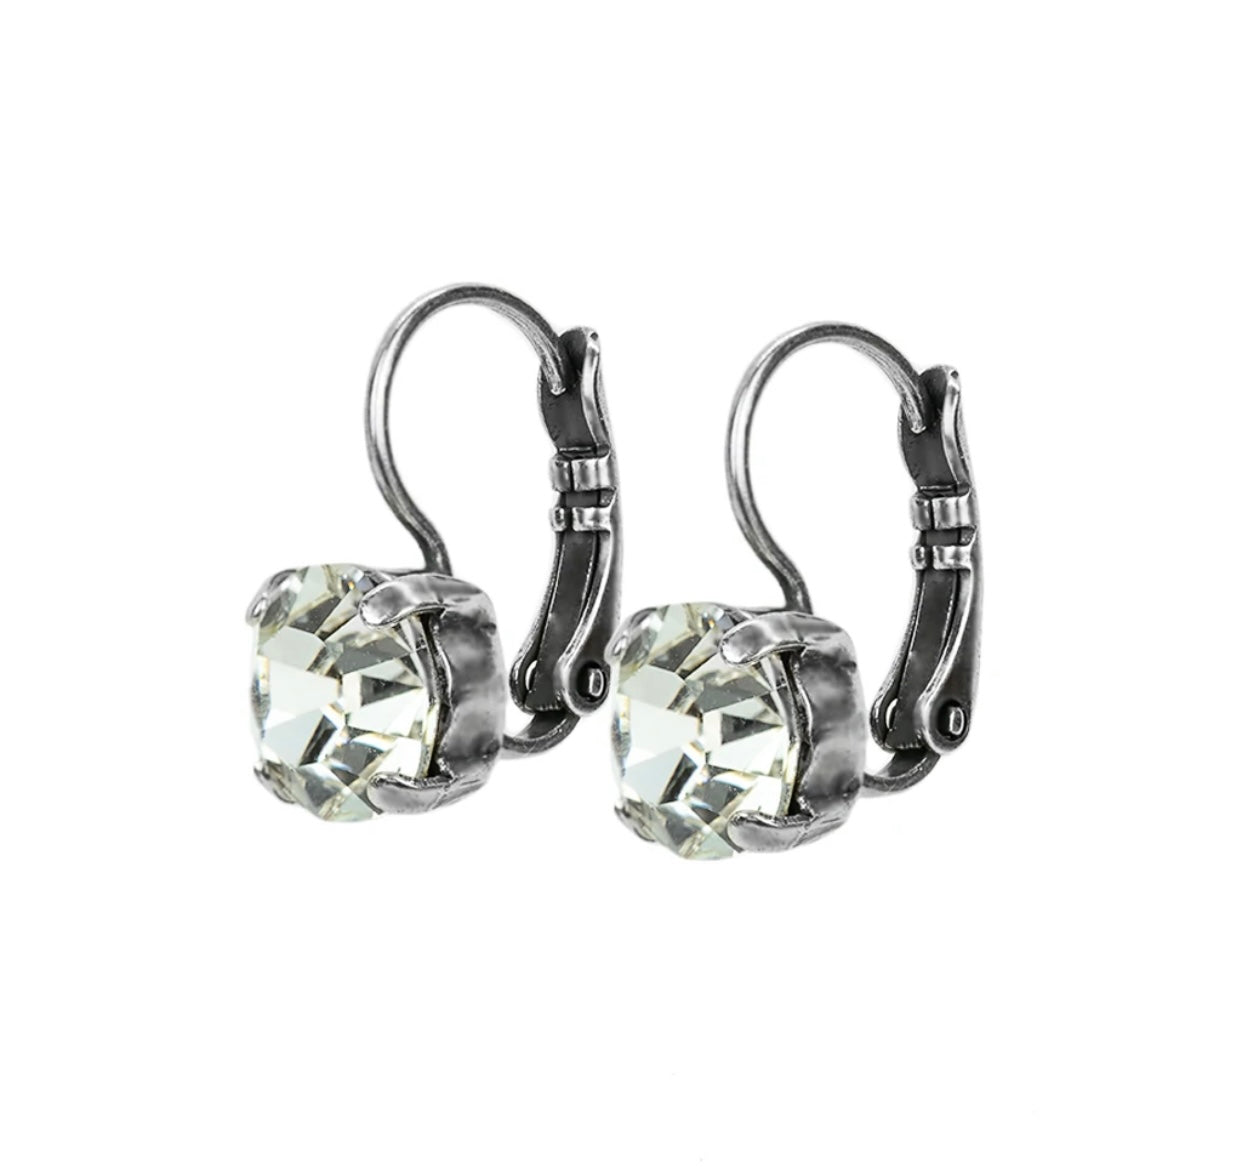 Mariana Silver Single Stone Leverback Crystal Earrings in "Clear"